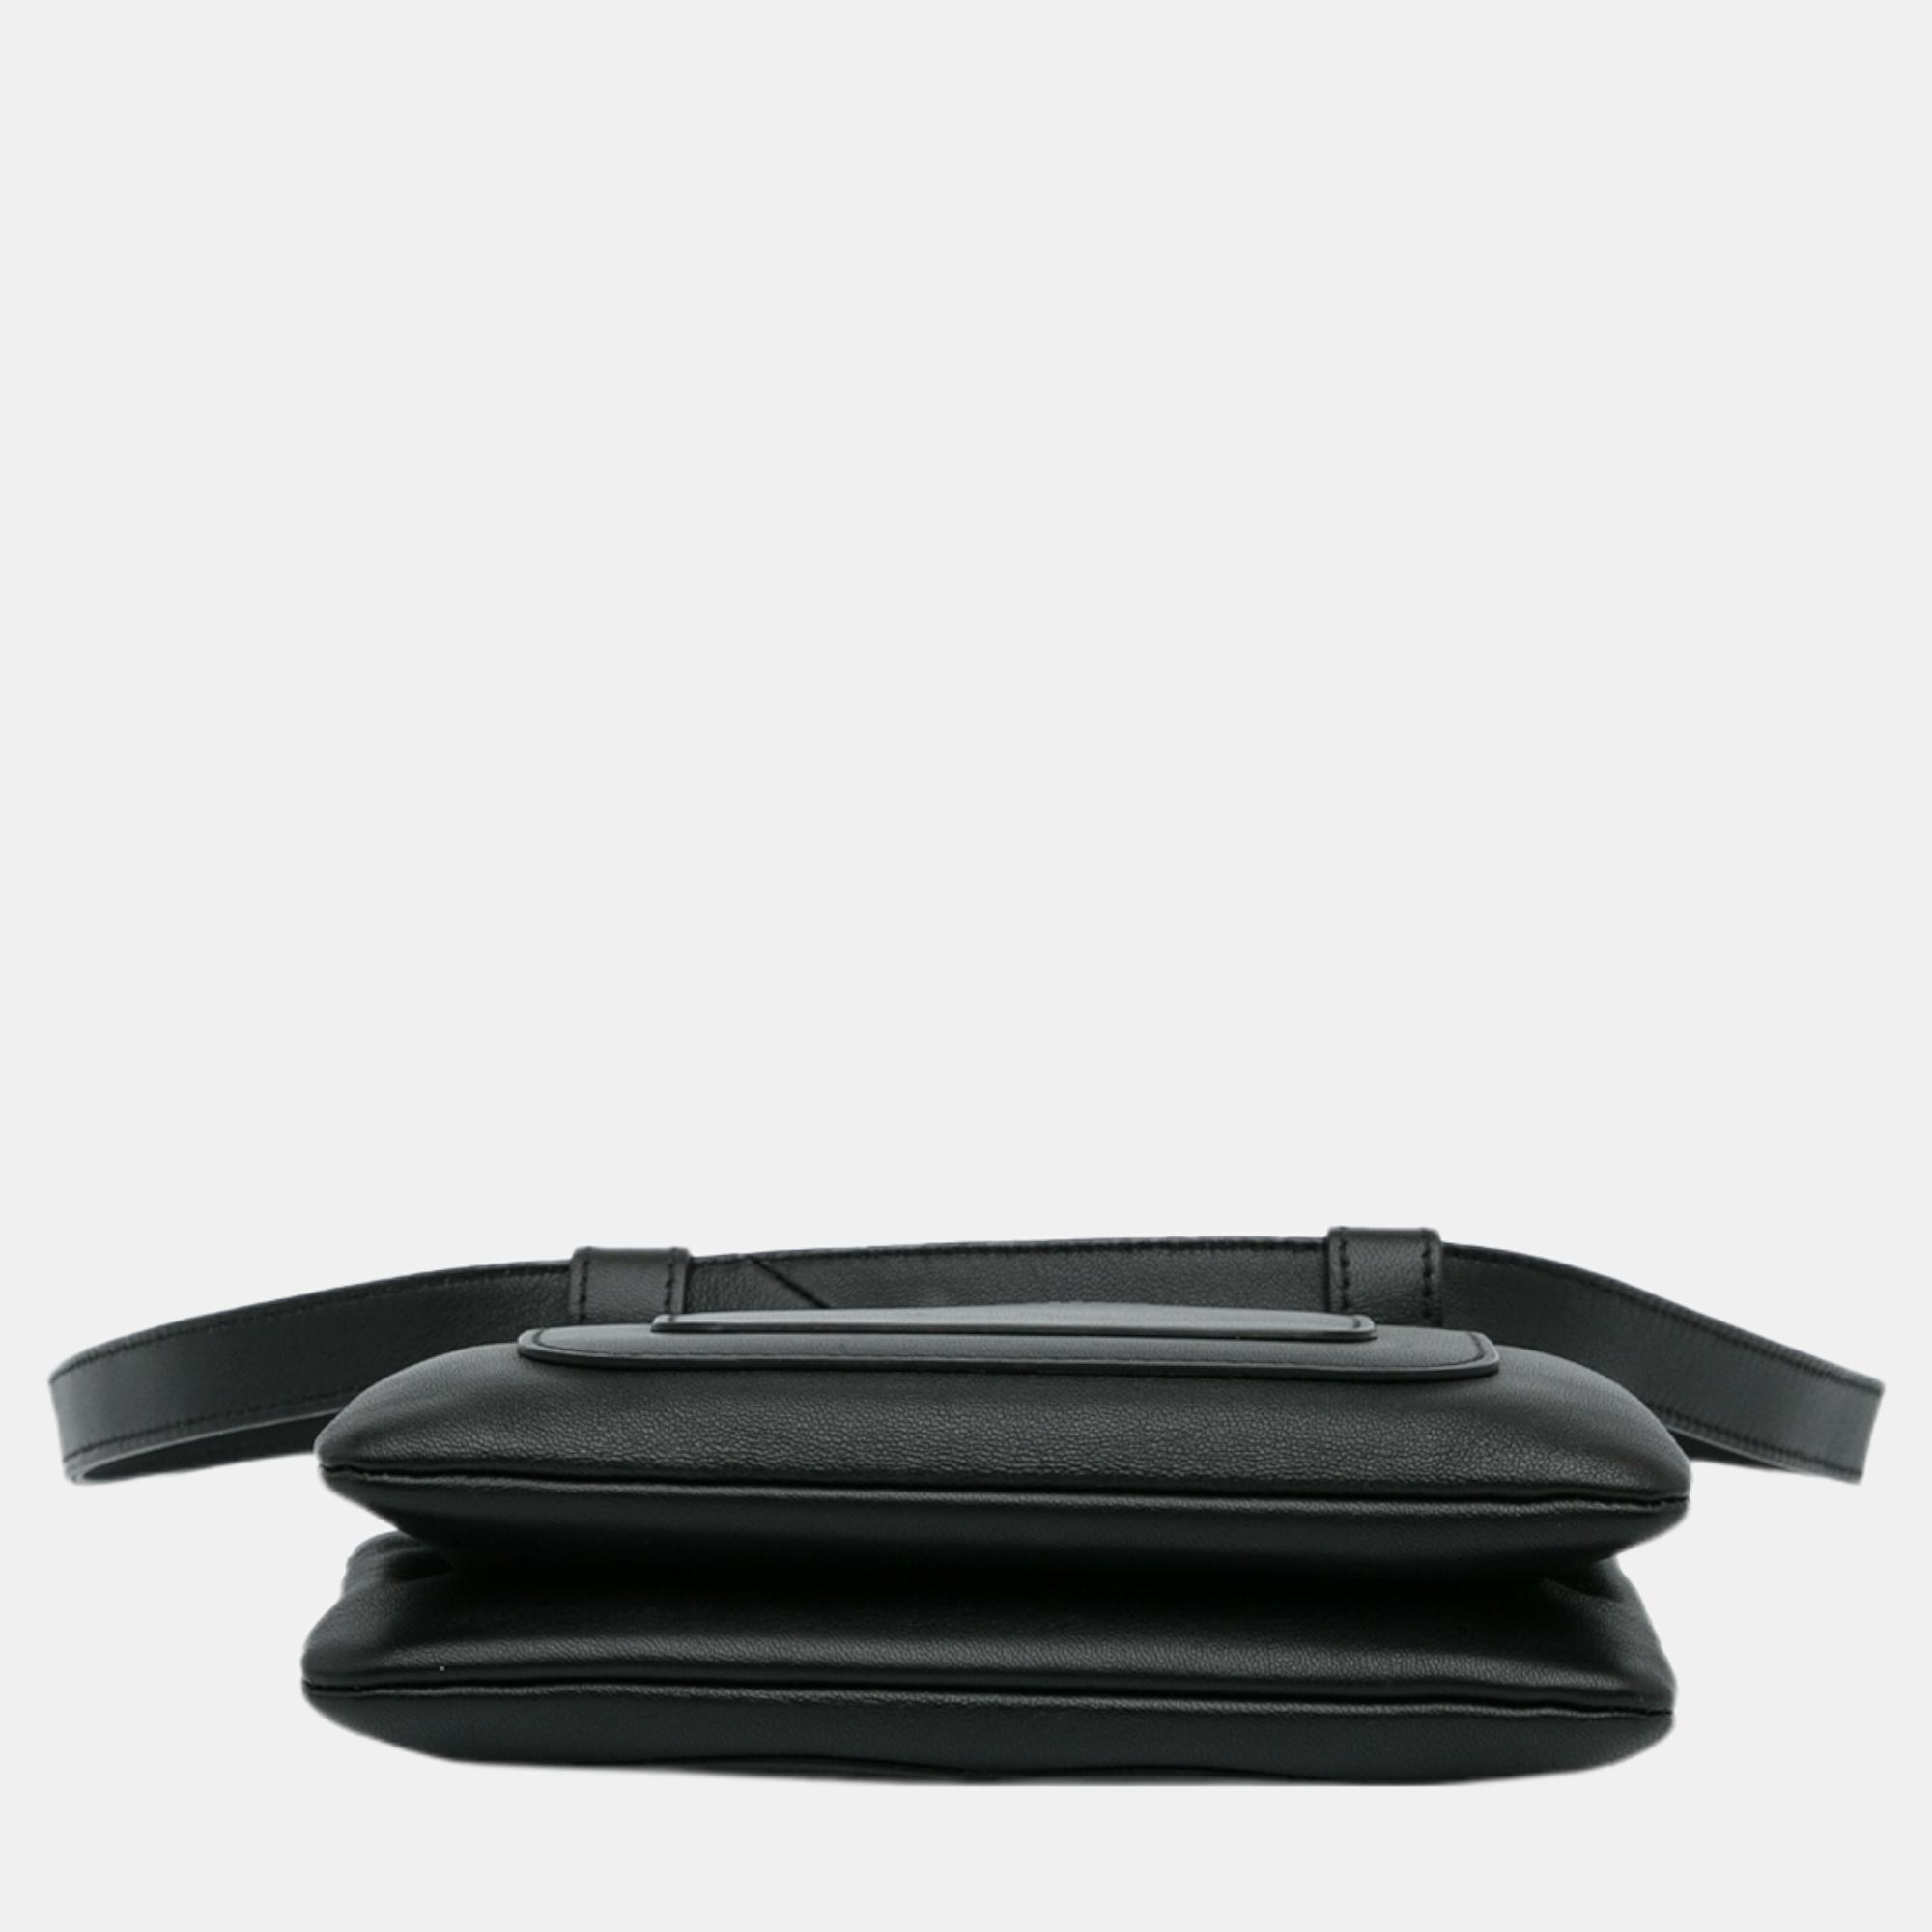 Chanel Black CC Mania Waist Bag